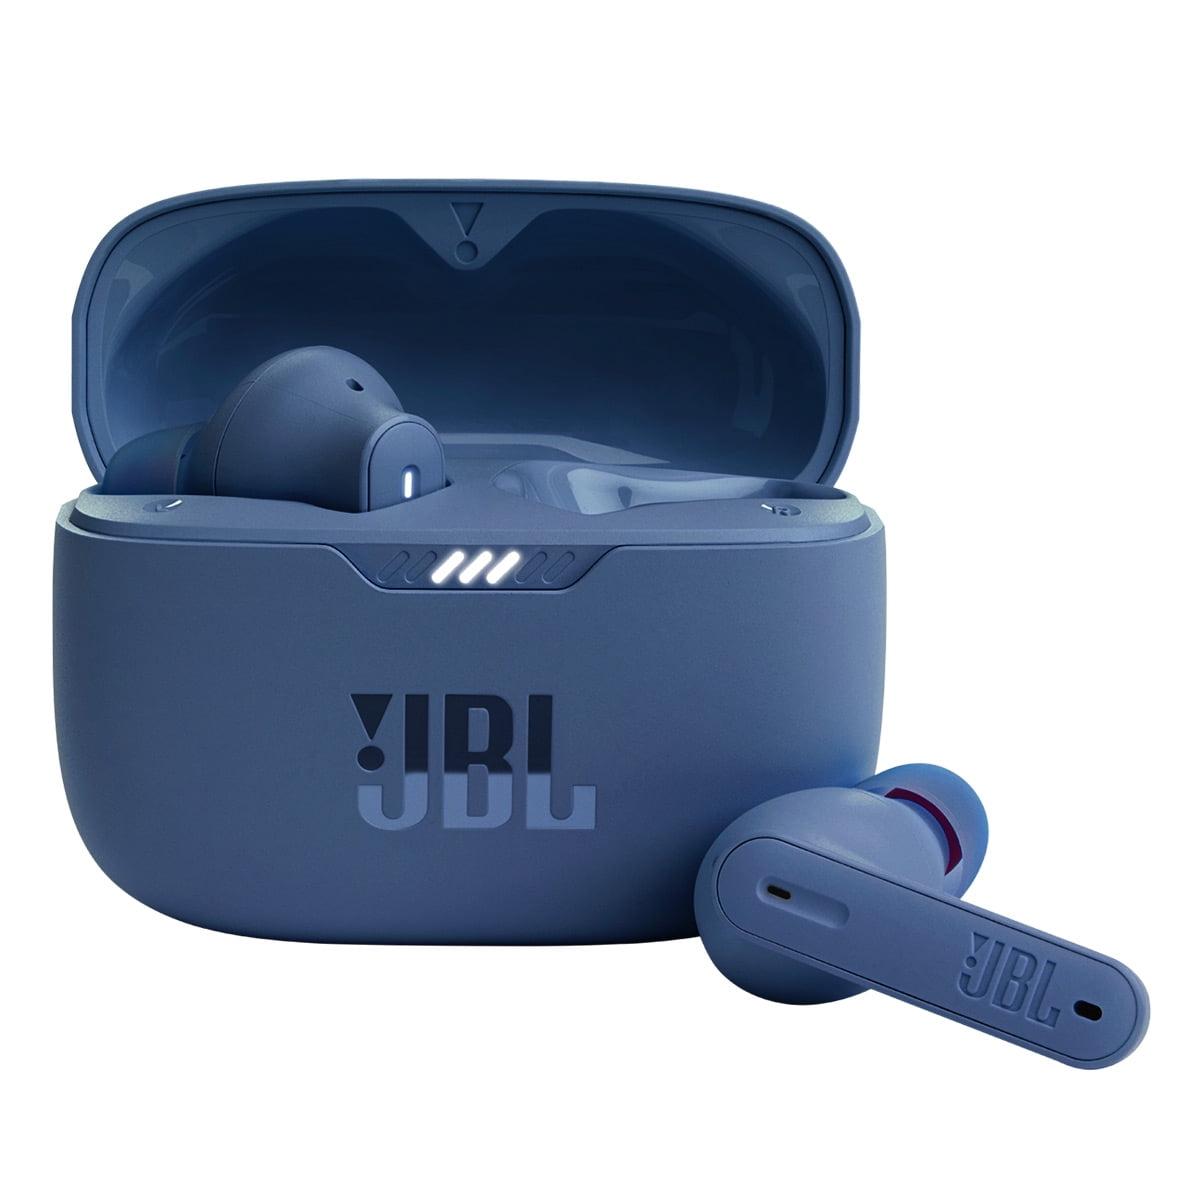 JBL Earbuds Wireless Headphones with Charging Case, Blue, 230NC - Walmart.com